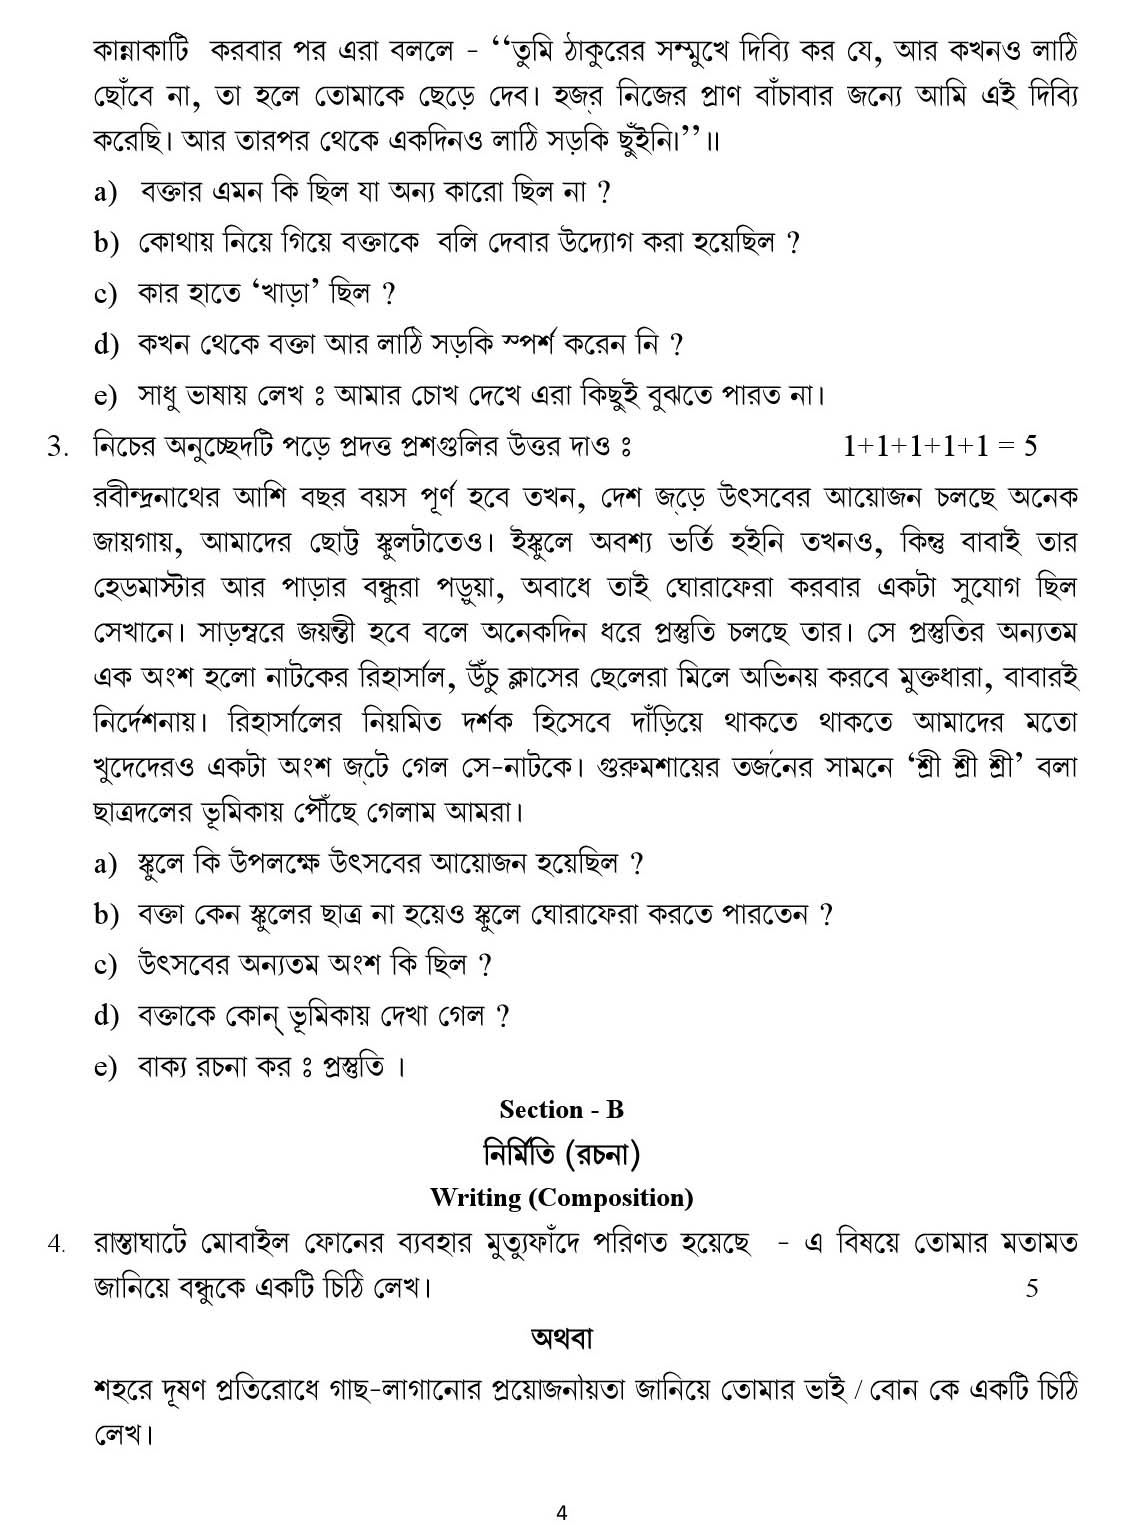 Bengali CBSE Class X Sample Question Paper 2018-19 - Image 4